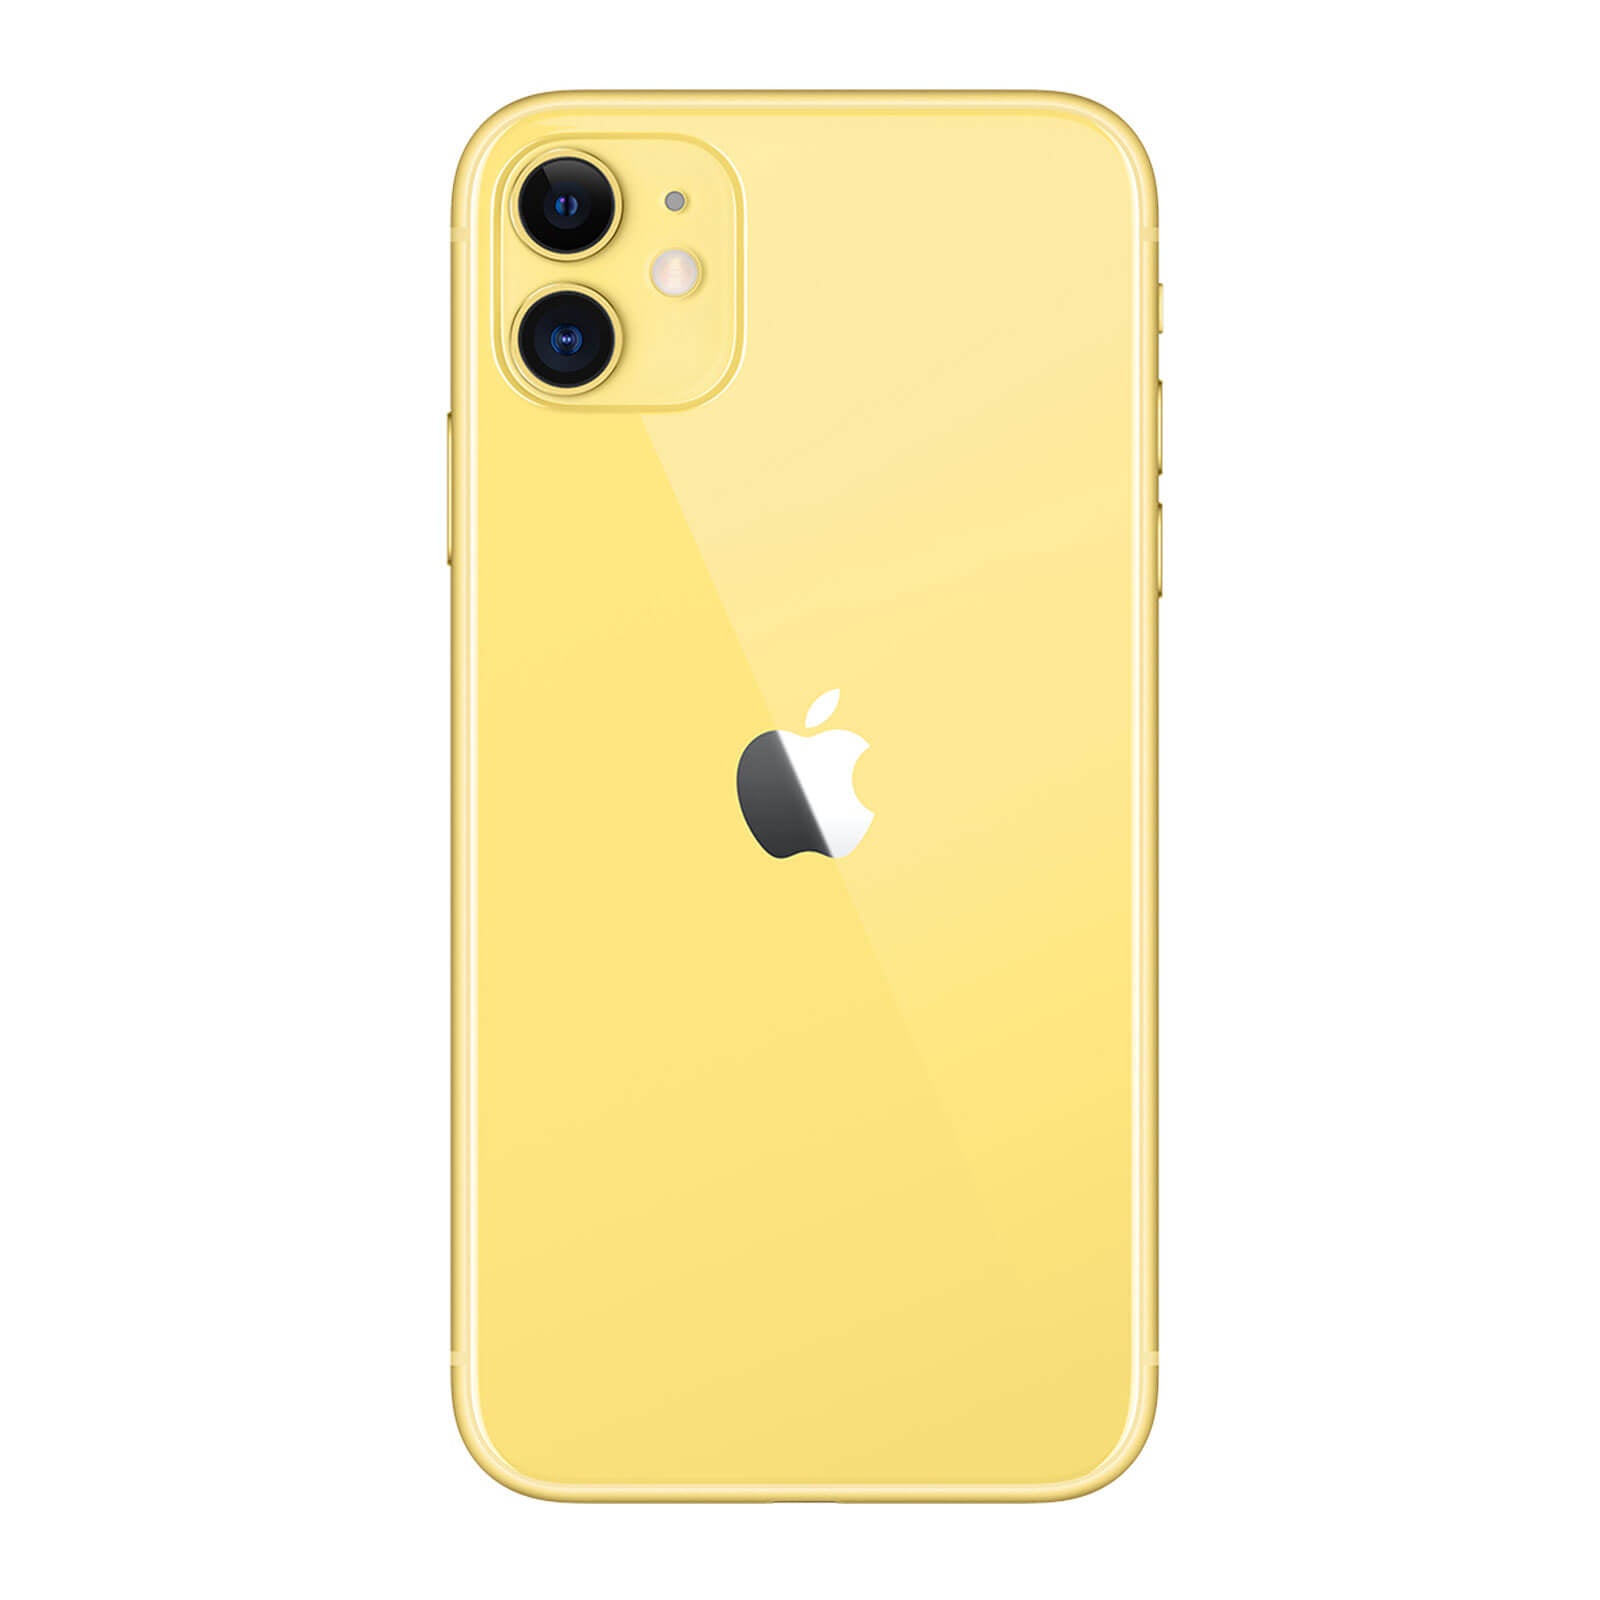 Apple iPhone 11 256GB Yellow Pristine - Unlocked